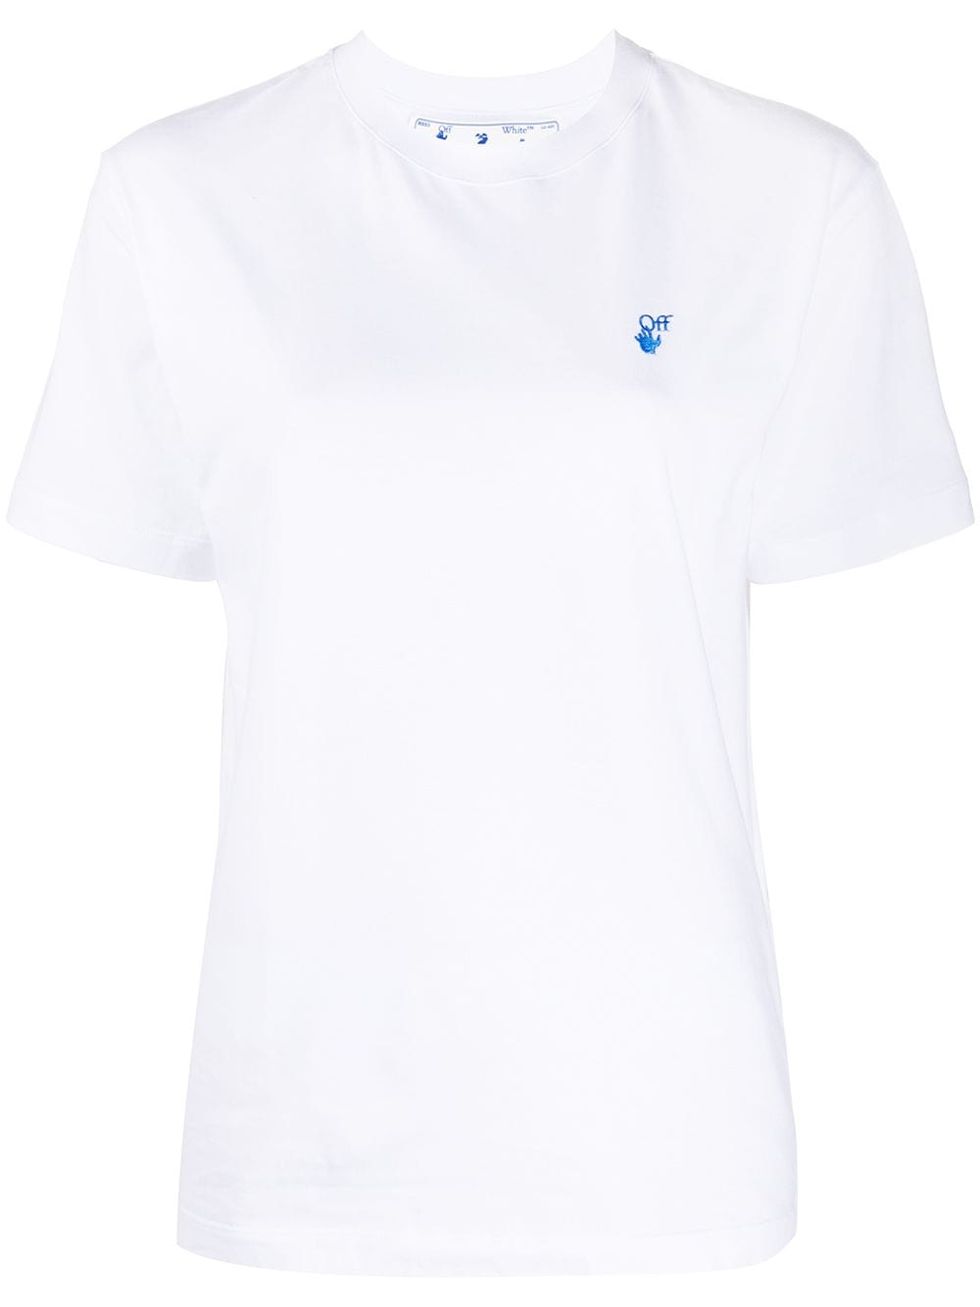 La t-shirt bianca (micro)ricamata